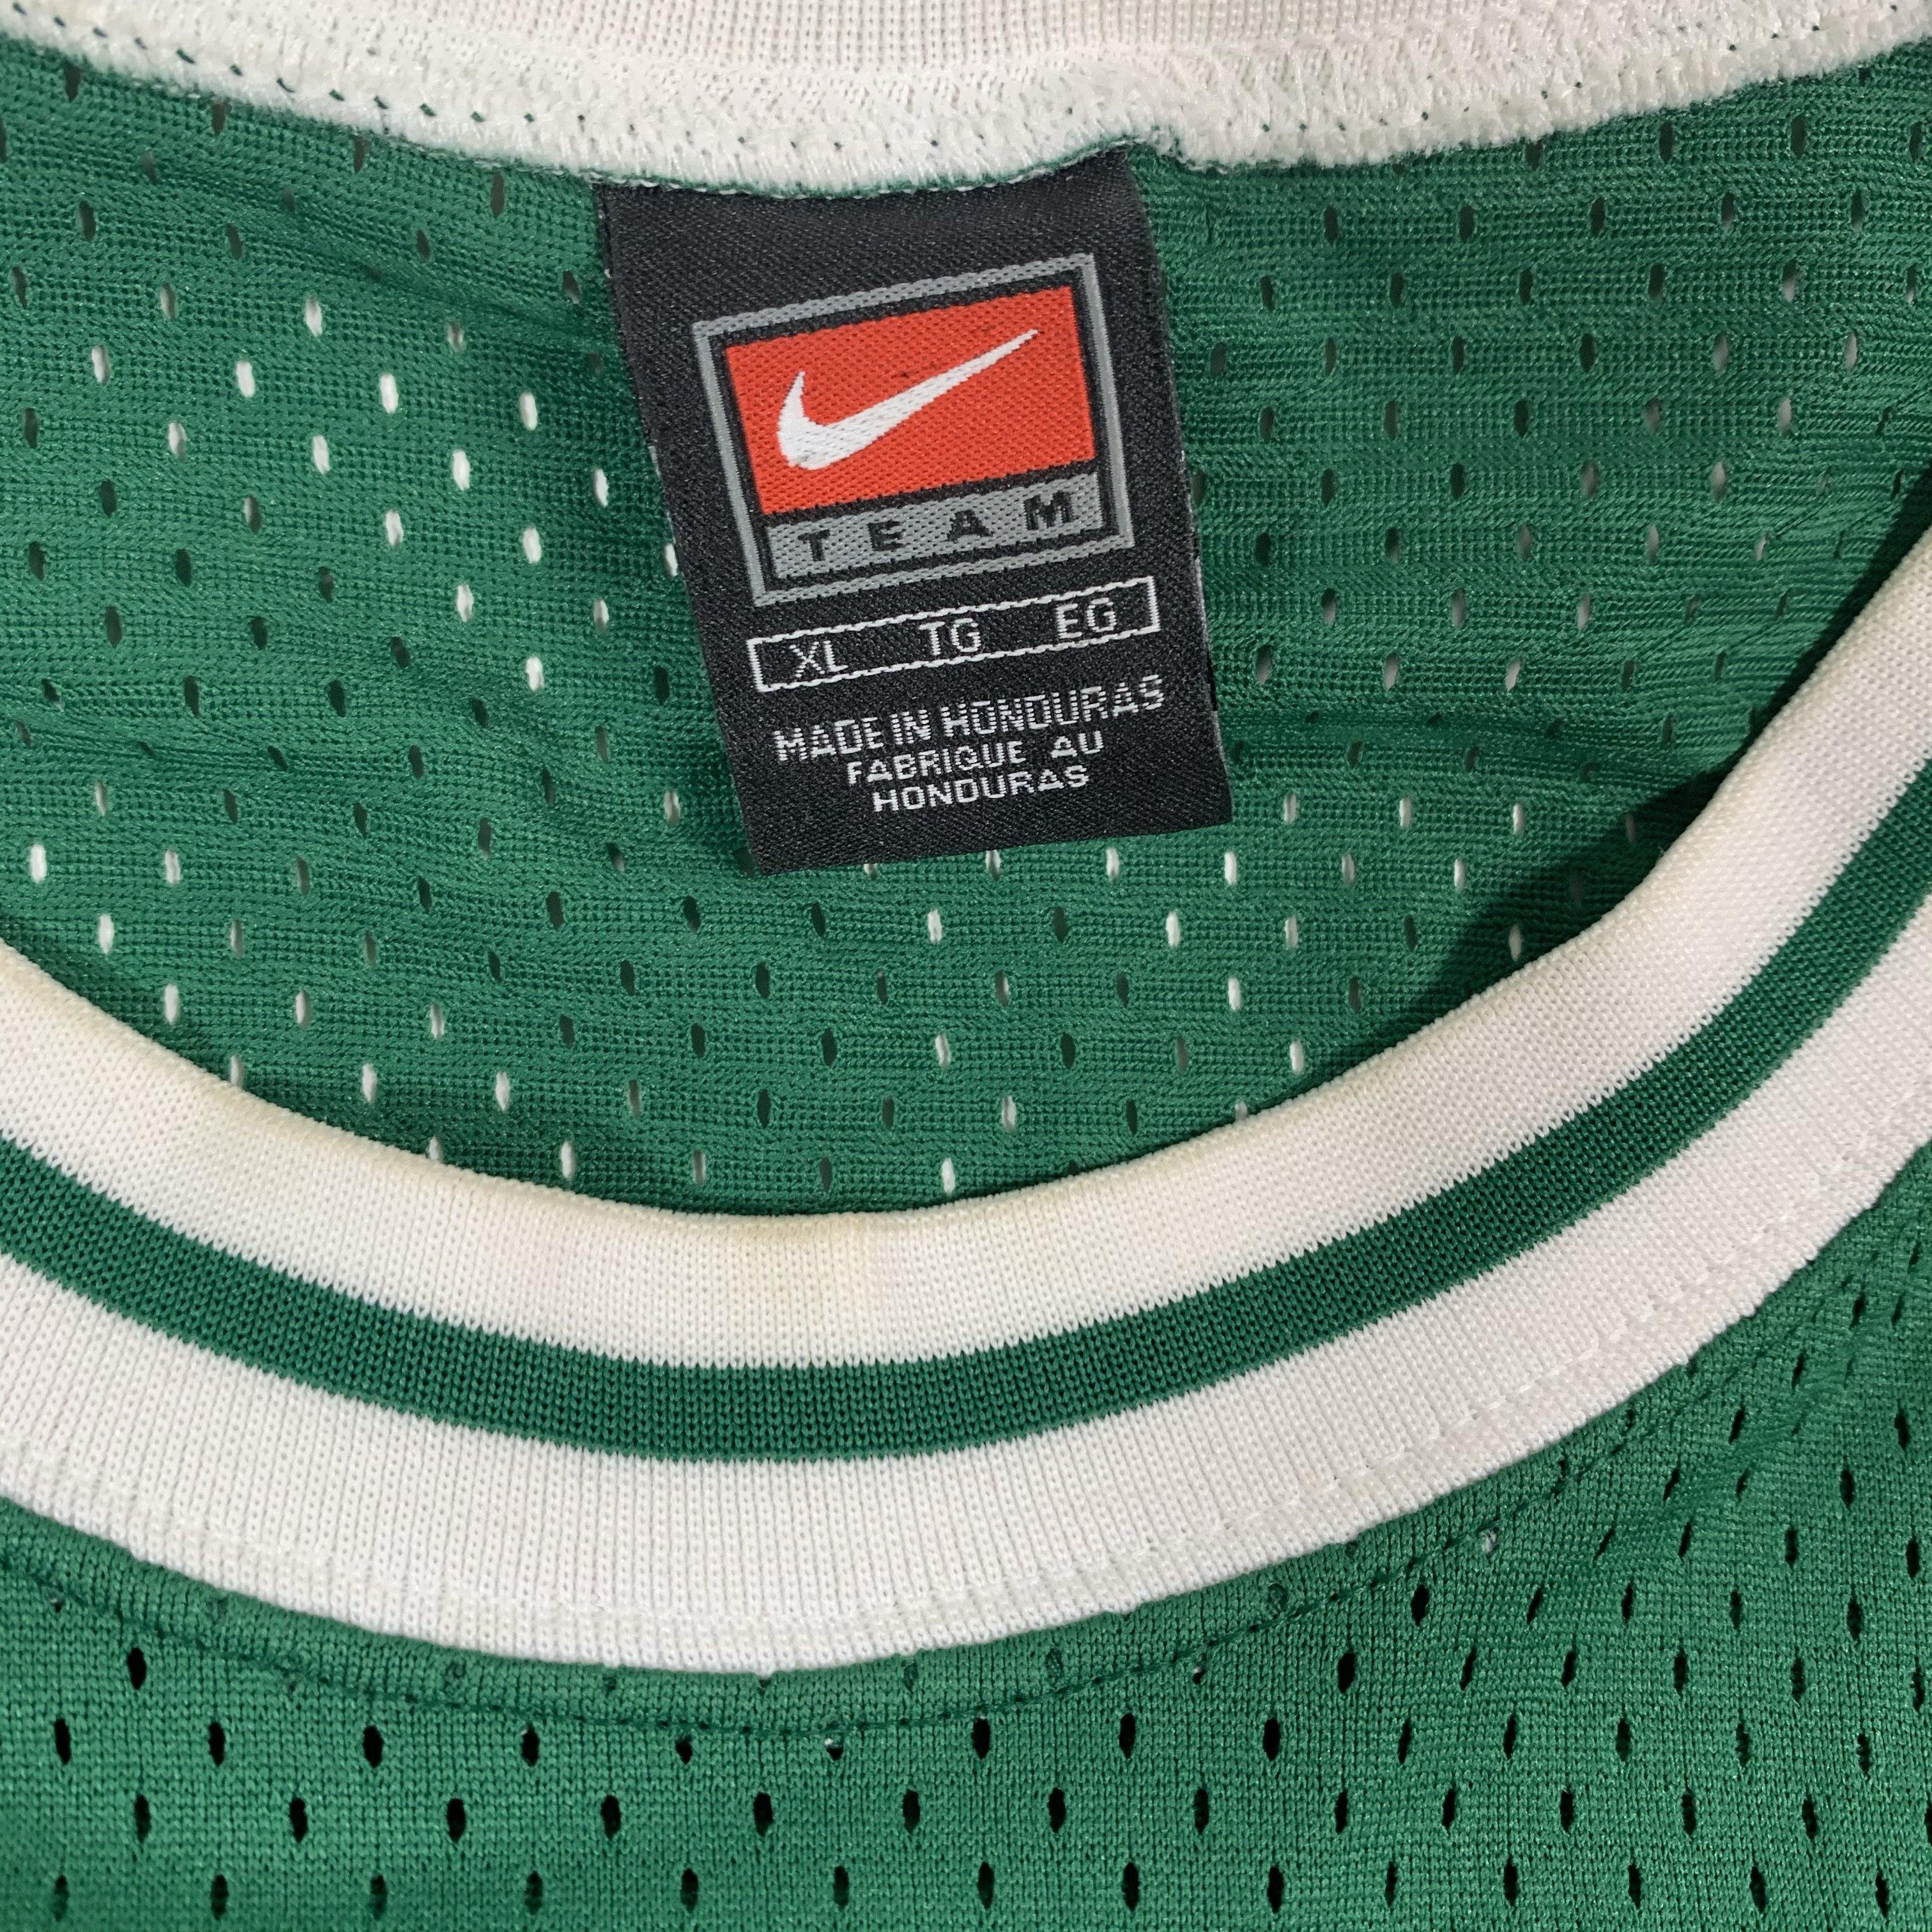 90's Paul Pierce Inglewood High Nike TAG Swingman Jersey Size